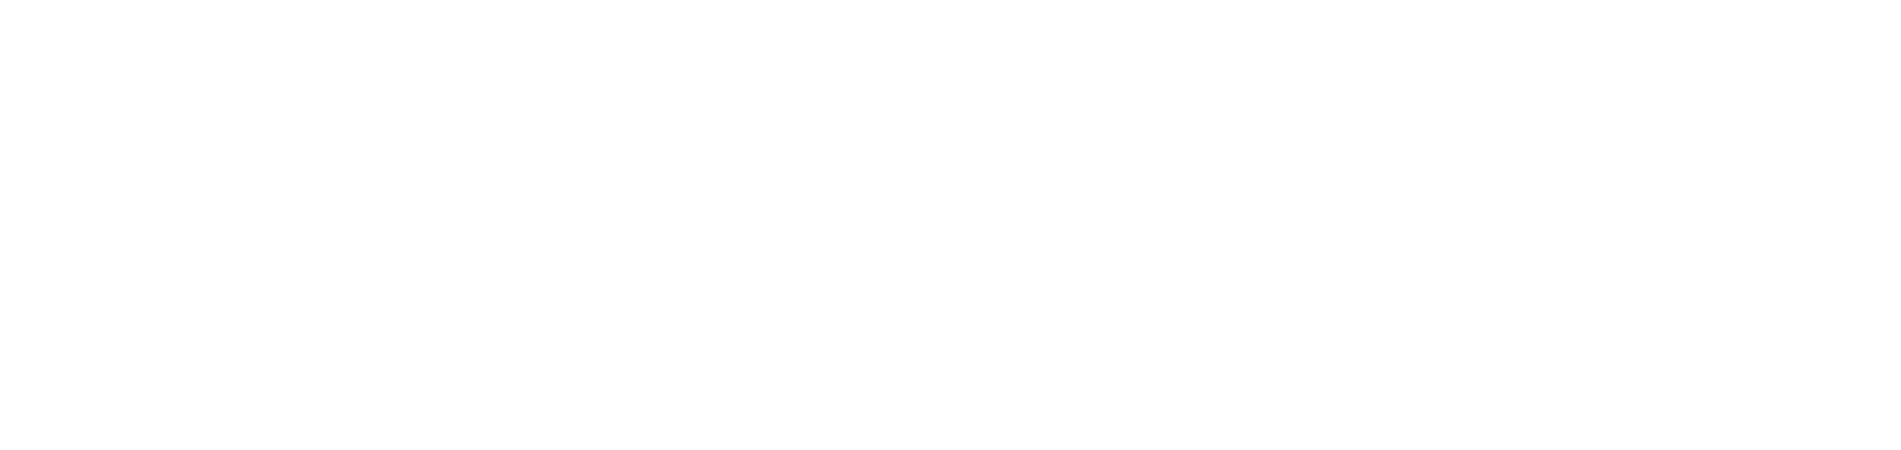 Boys & Girls Clubs of Springfield